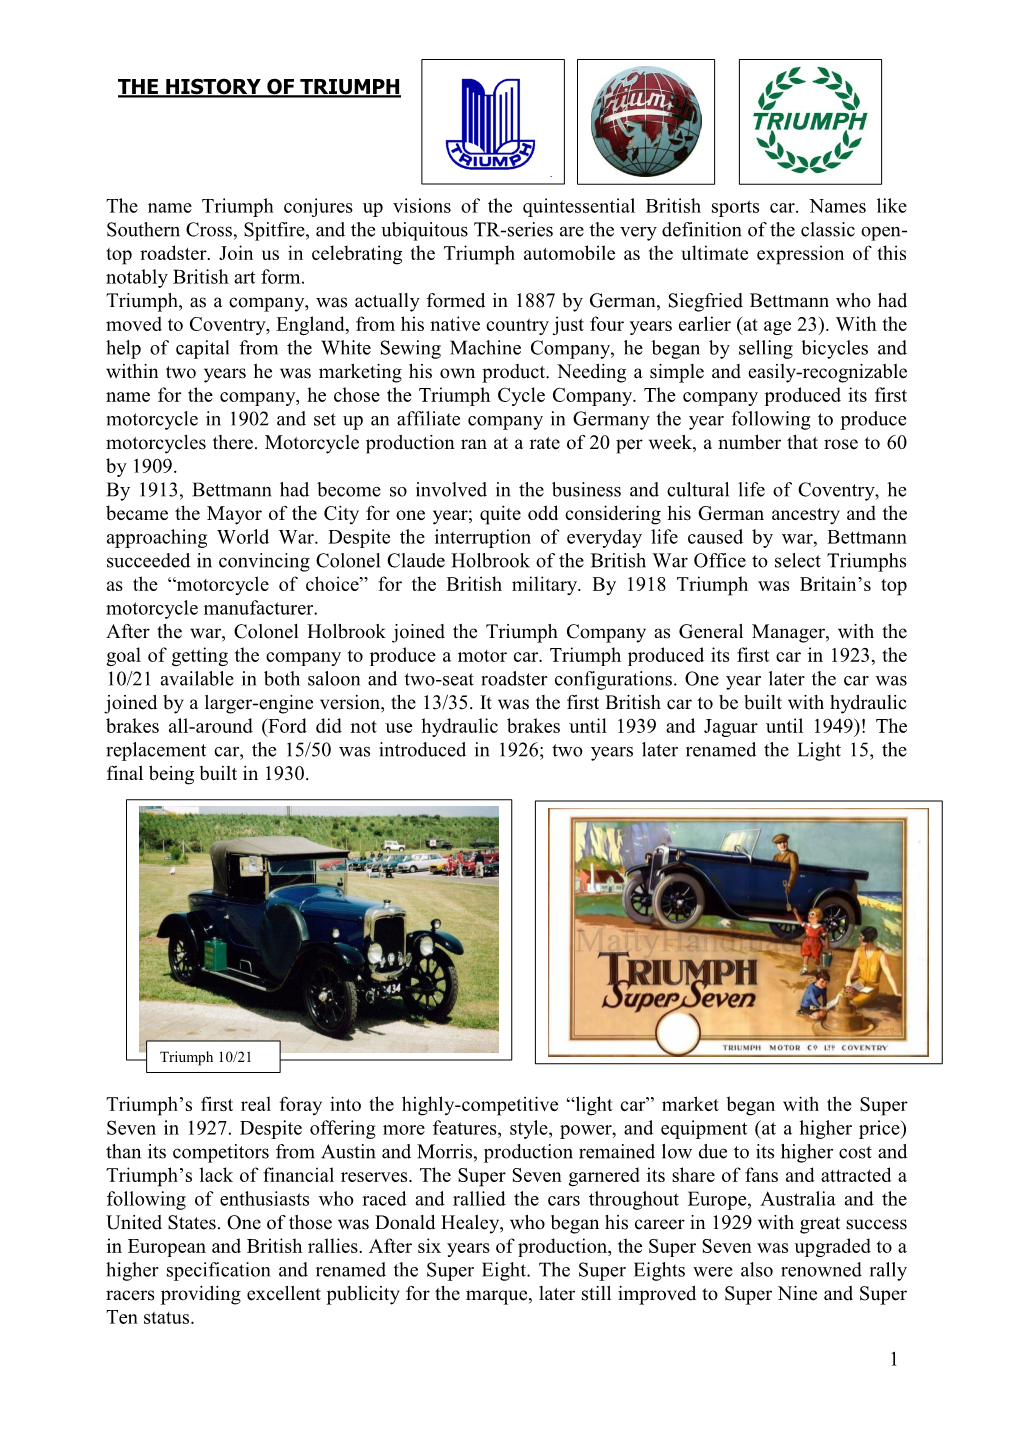 History of the Triumph Motor Company